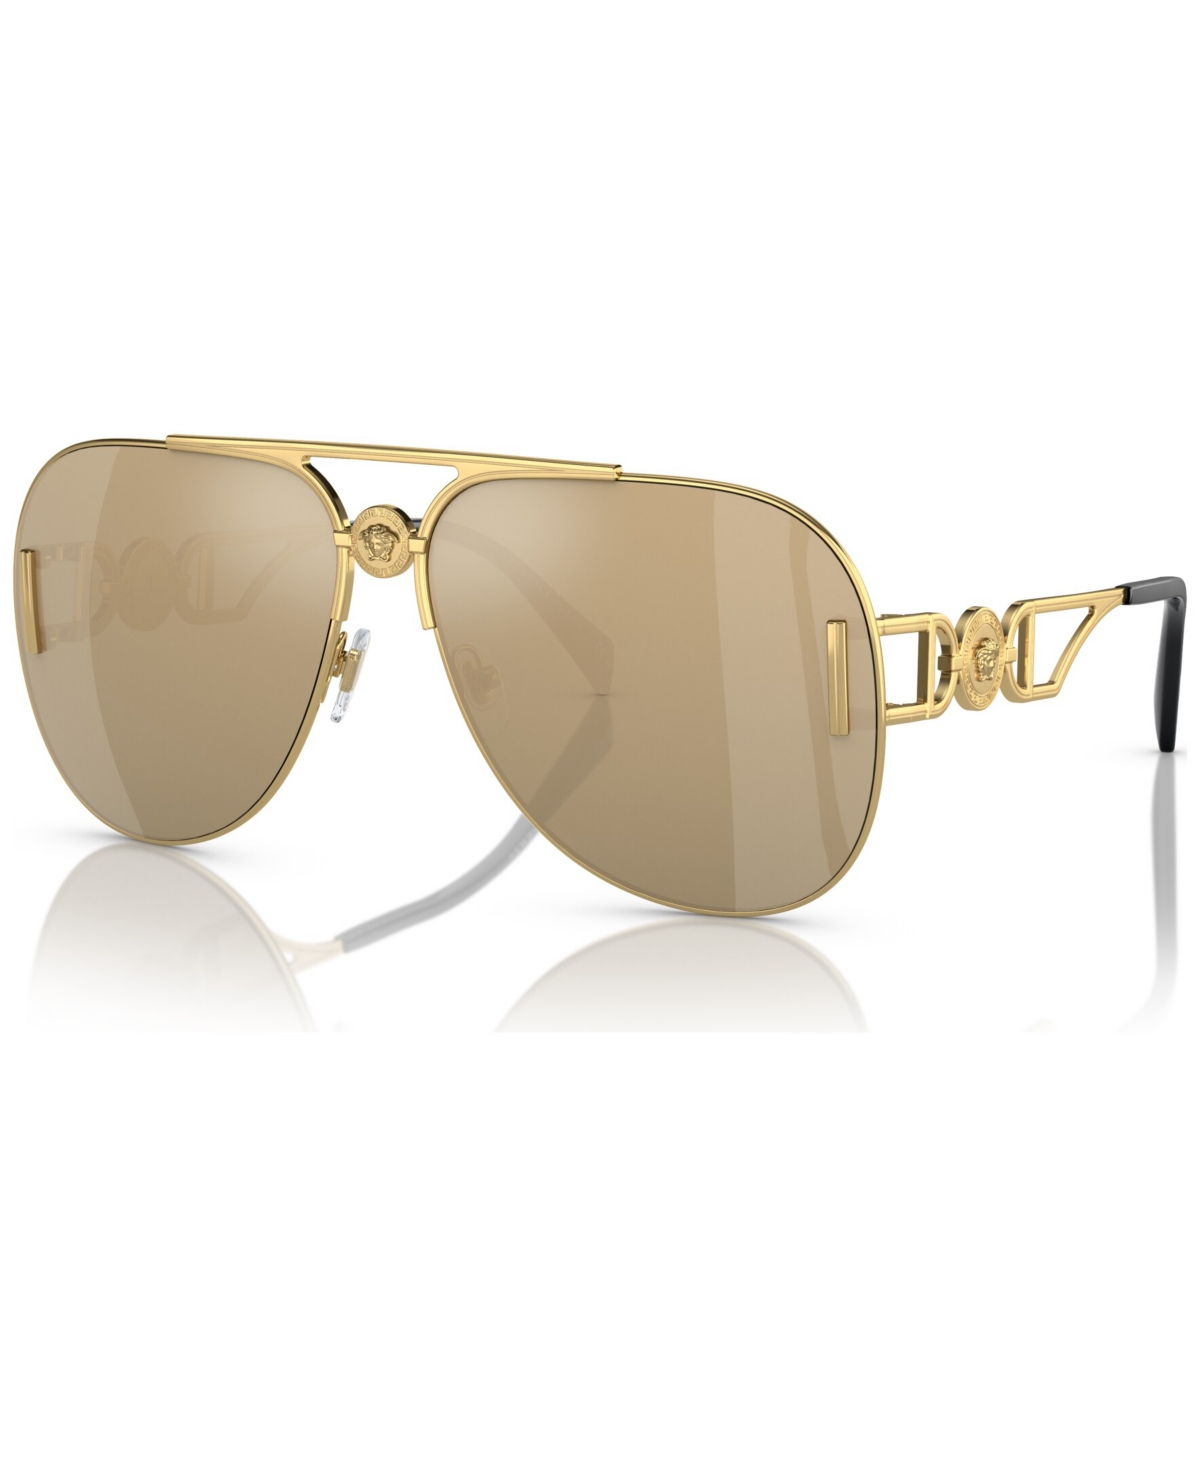 Unisex Sunglasses, VE2255 - Gold-Tone